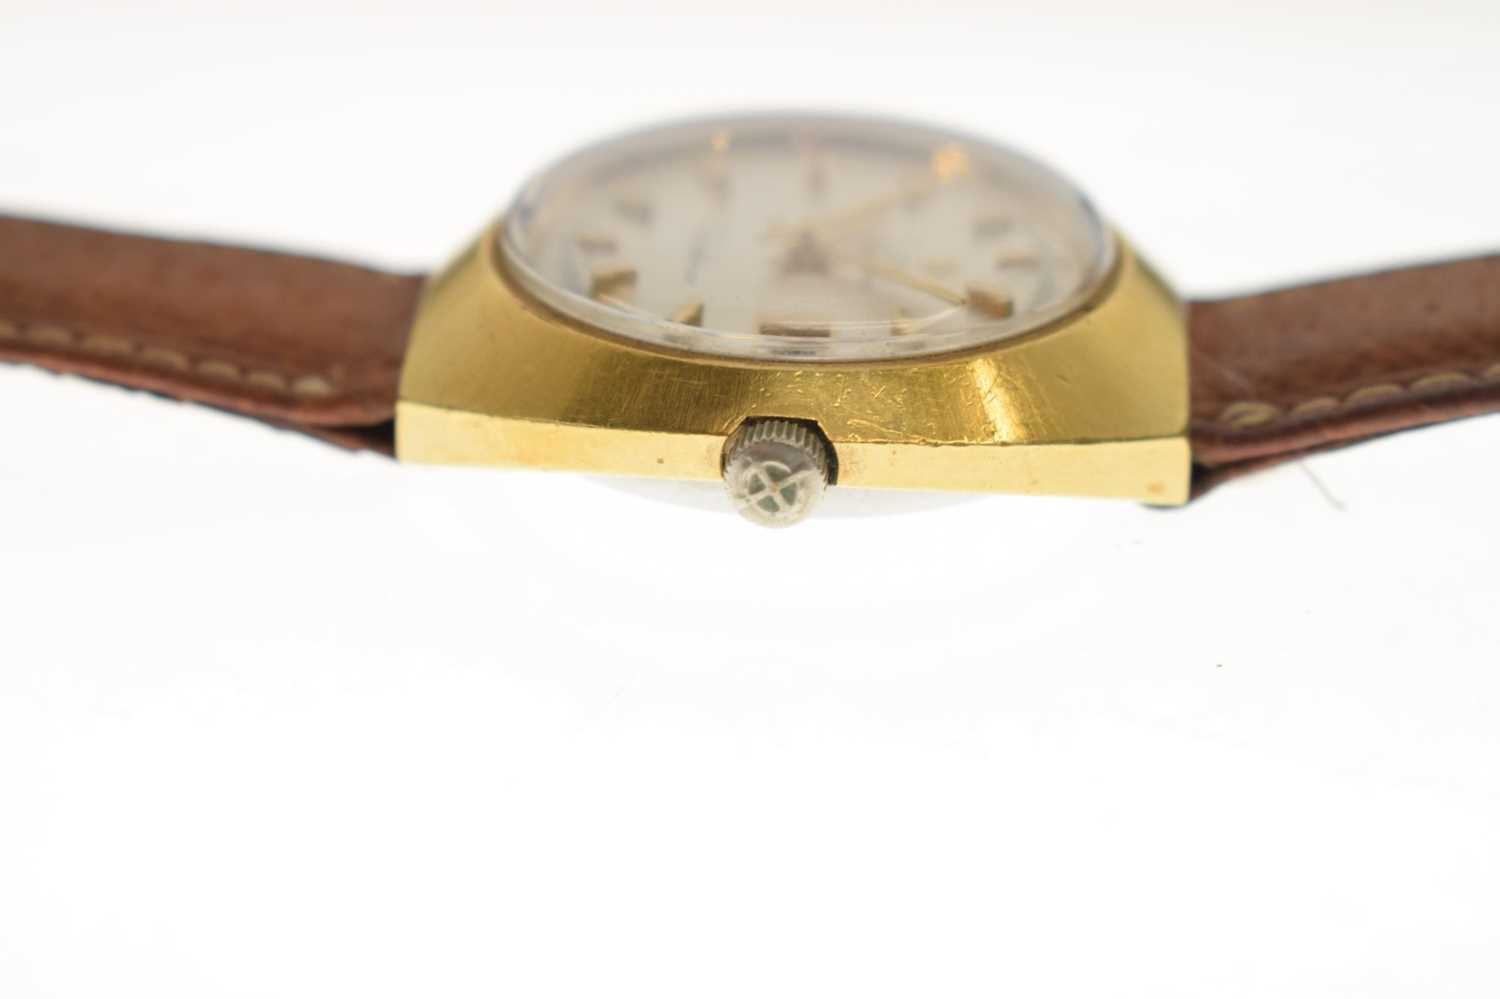 Zodiac - Gentleman's 'Kingline' Chronometer gold-plated cased wristwatch - Image 4 of 6